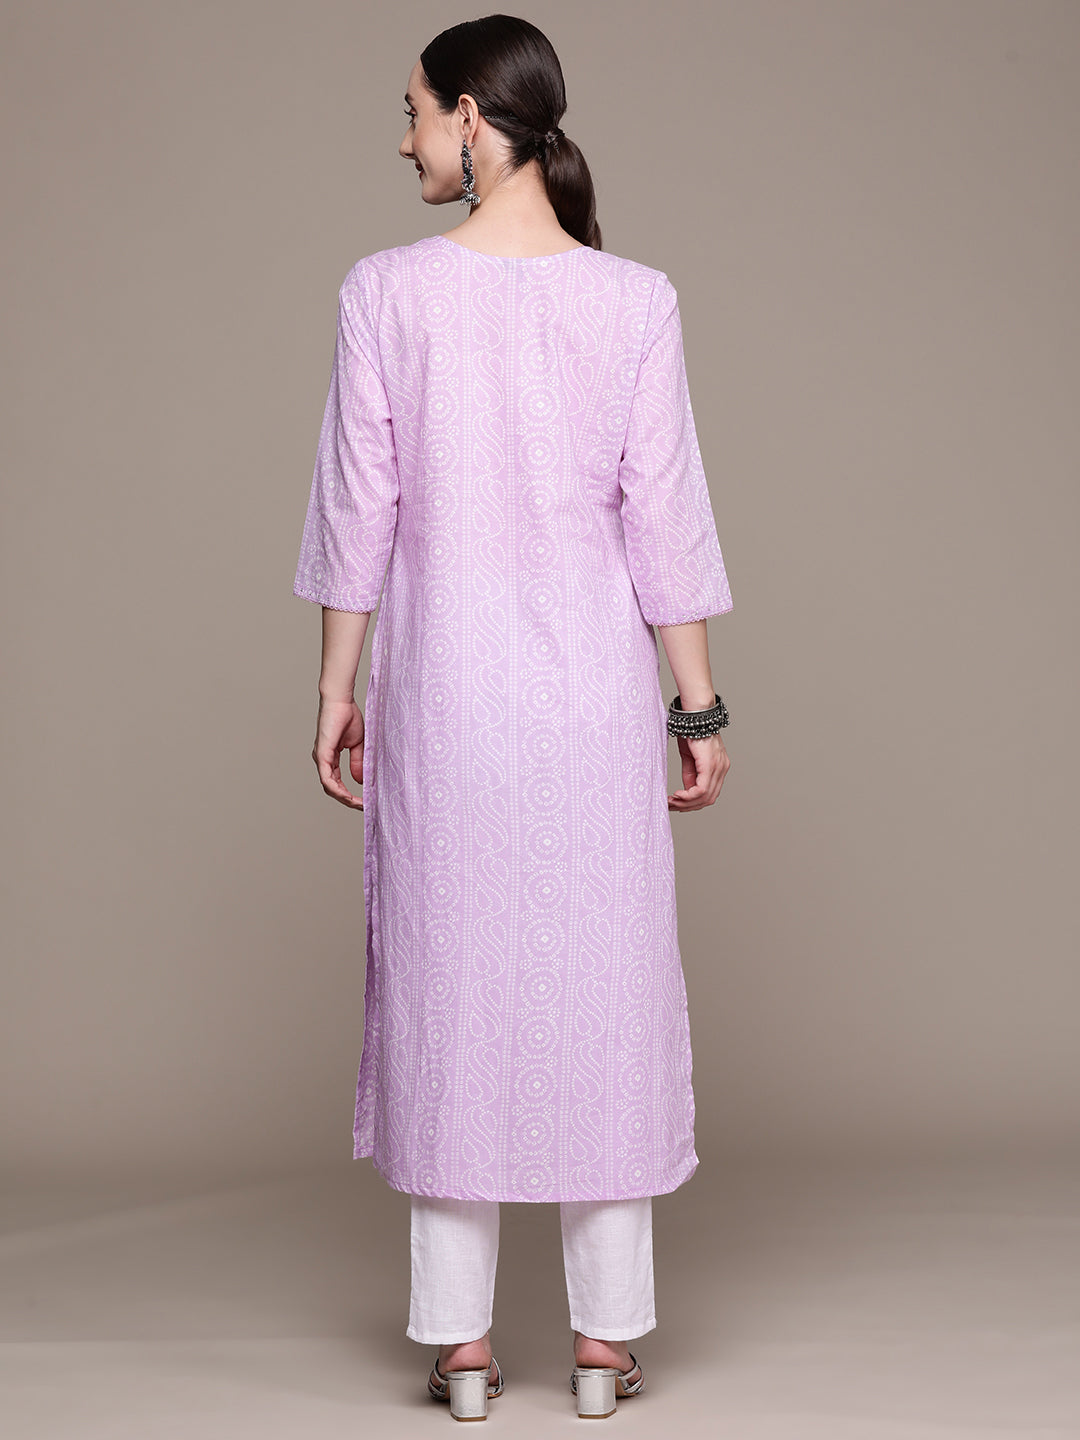 Ishin Women's Cotton Blend Lavender Bandhani Printed A-Line Kurta